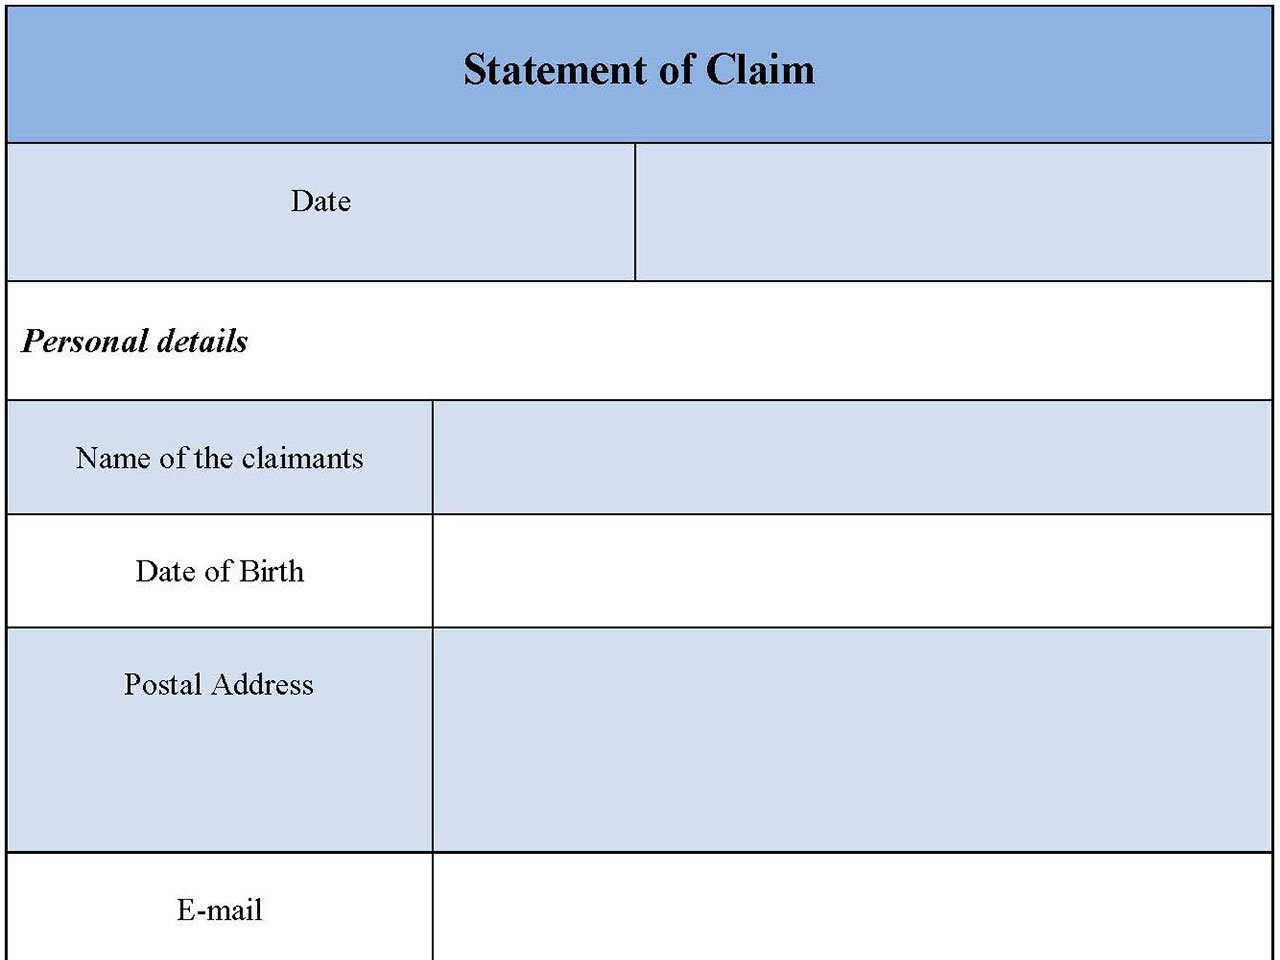 Statement of Claim Form